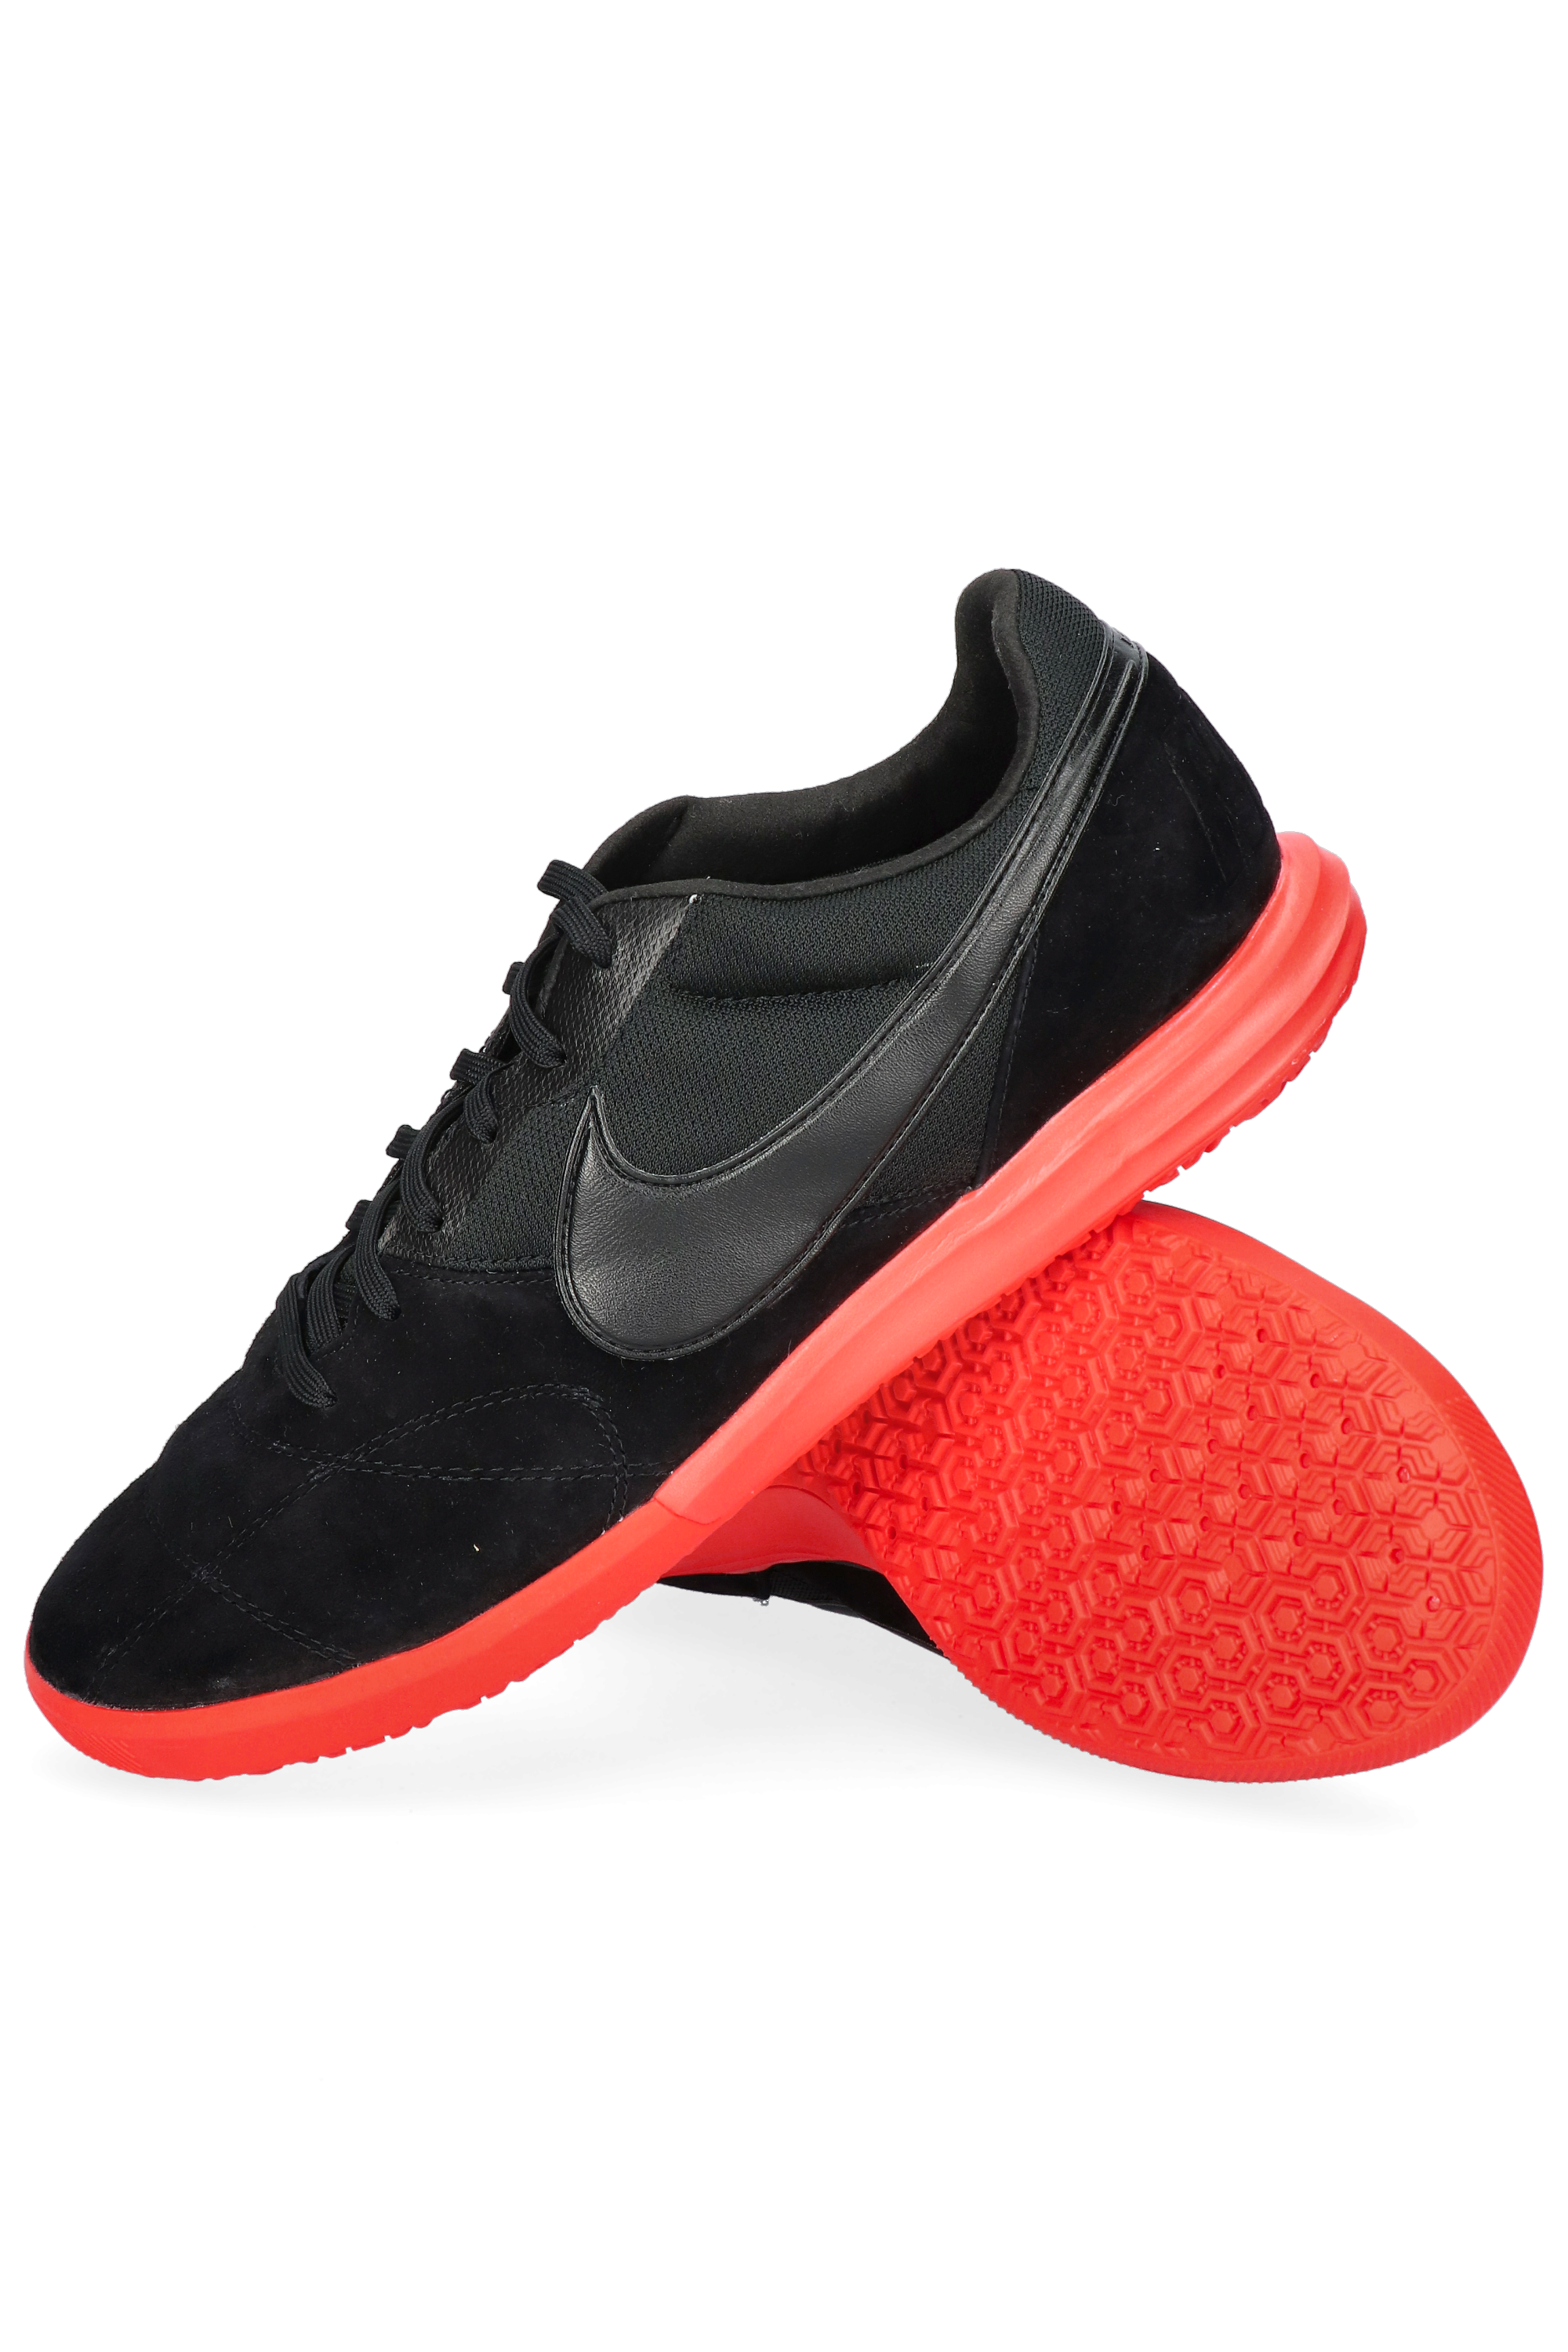 Nike II Sala | Football boots & equipment